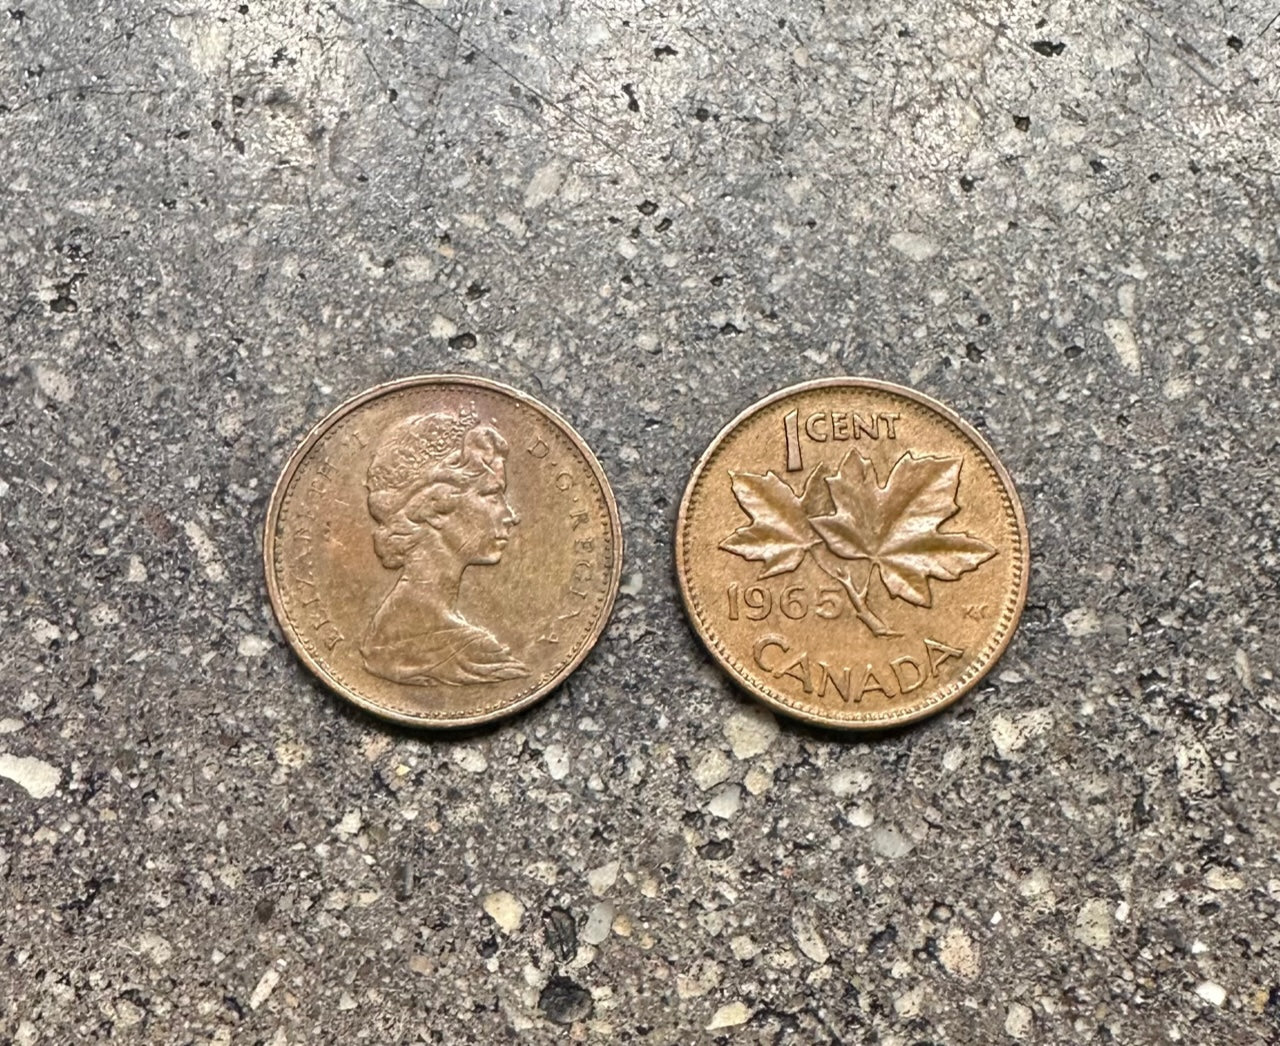 Canada Maple Leaf Penny Earrings (stud)